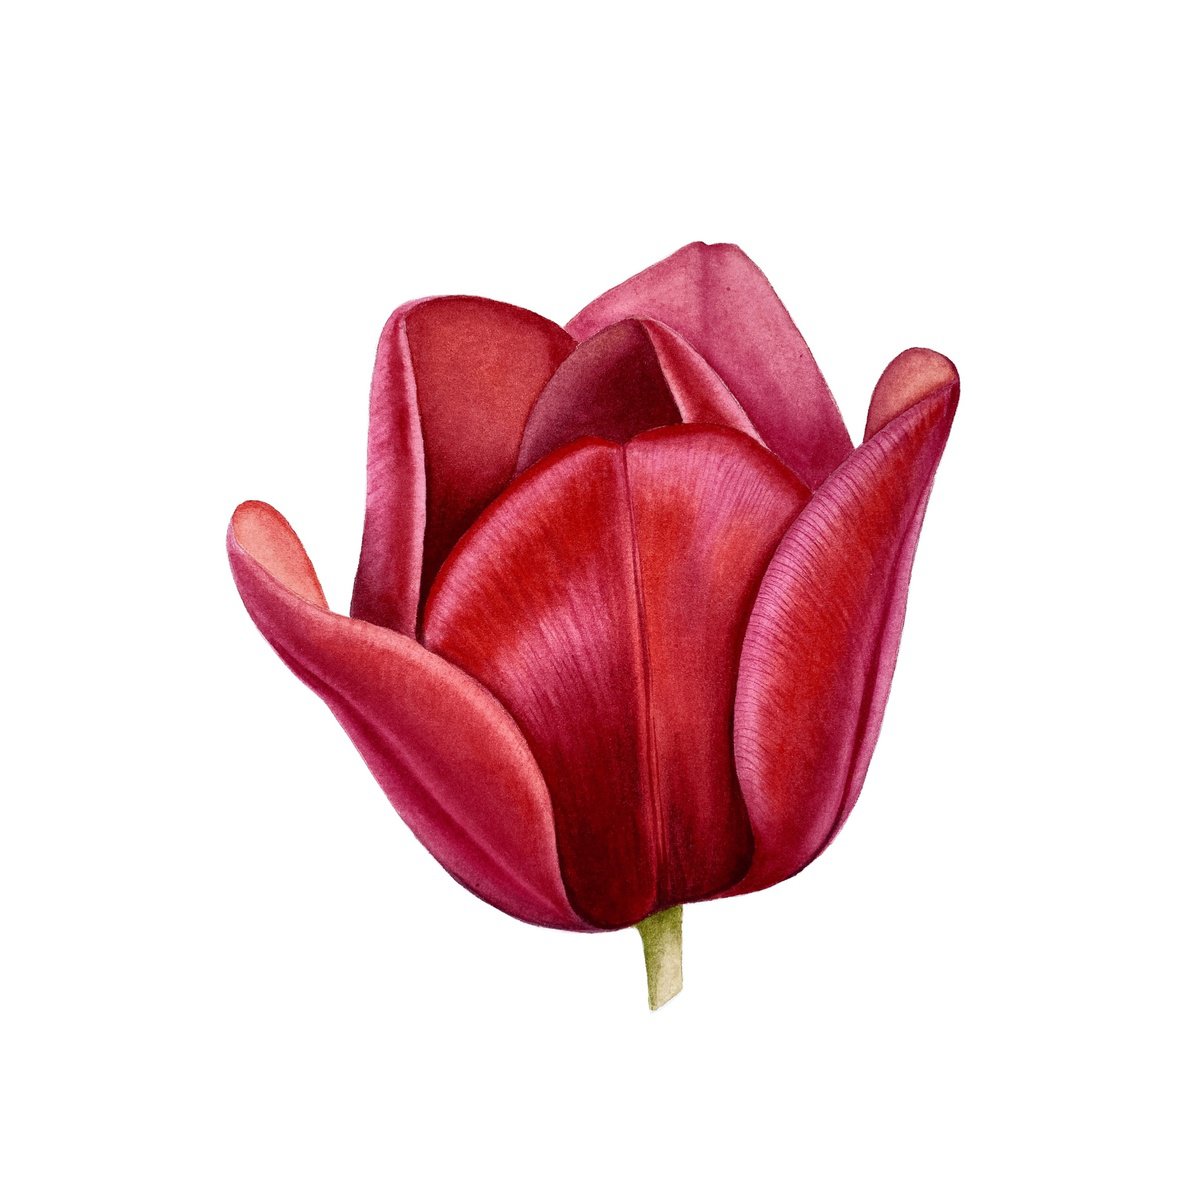 Watercolot red tulip by Tina Shyfruk